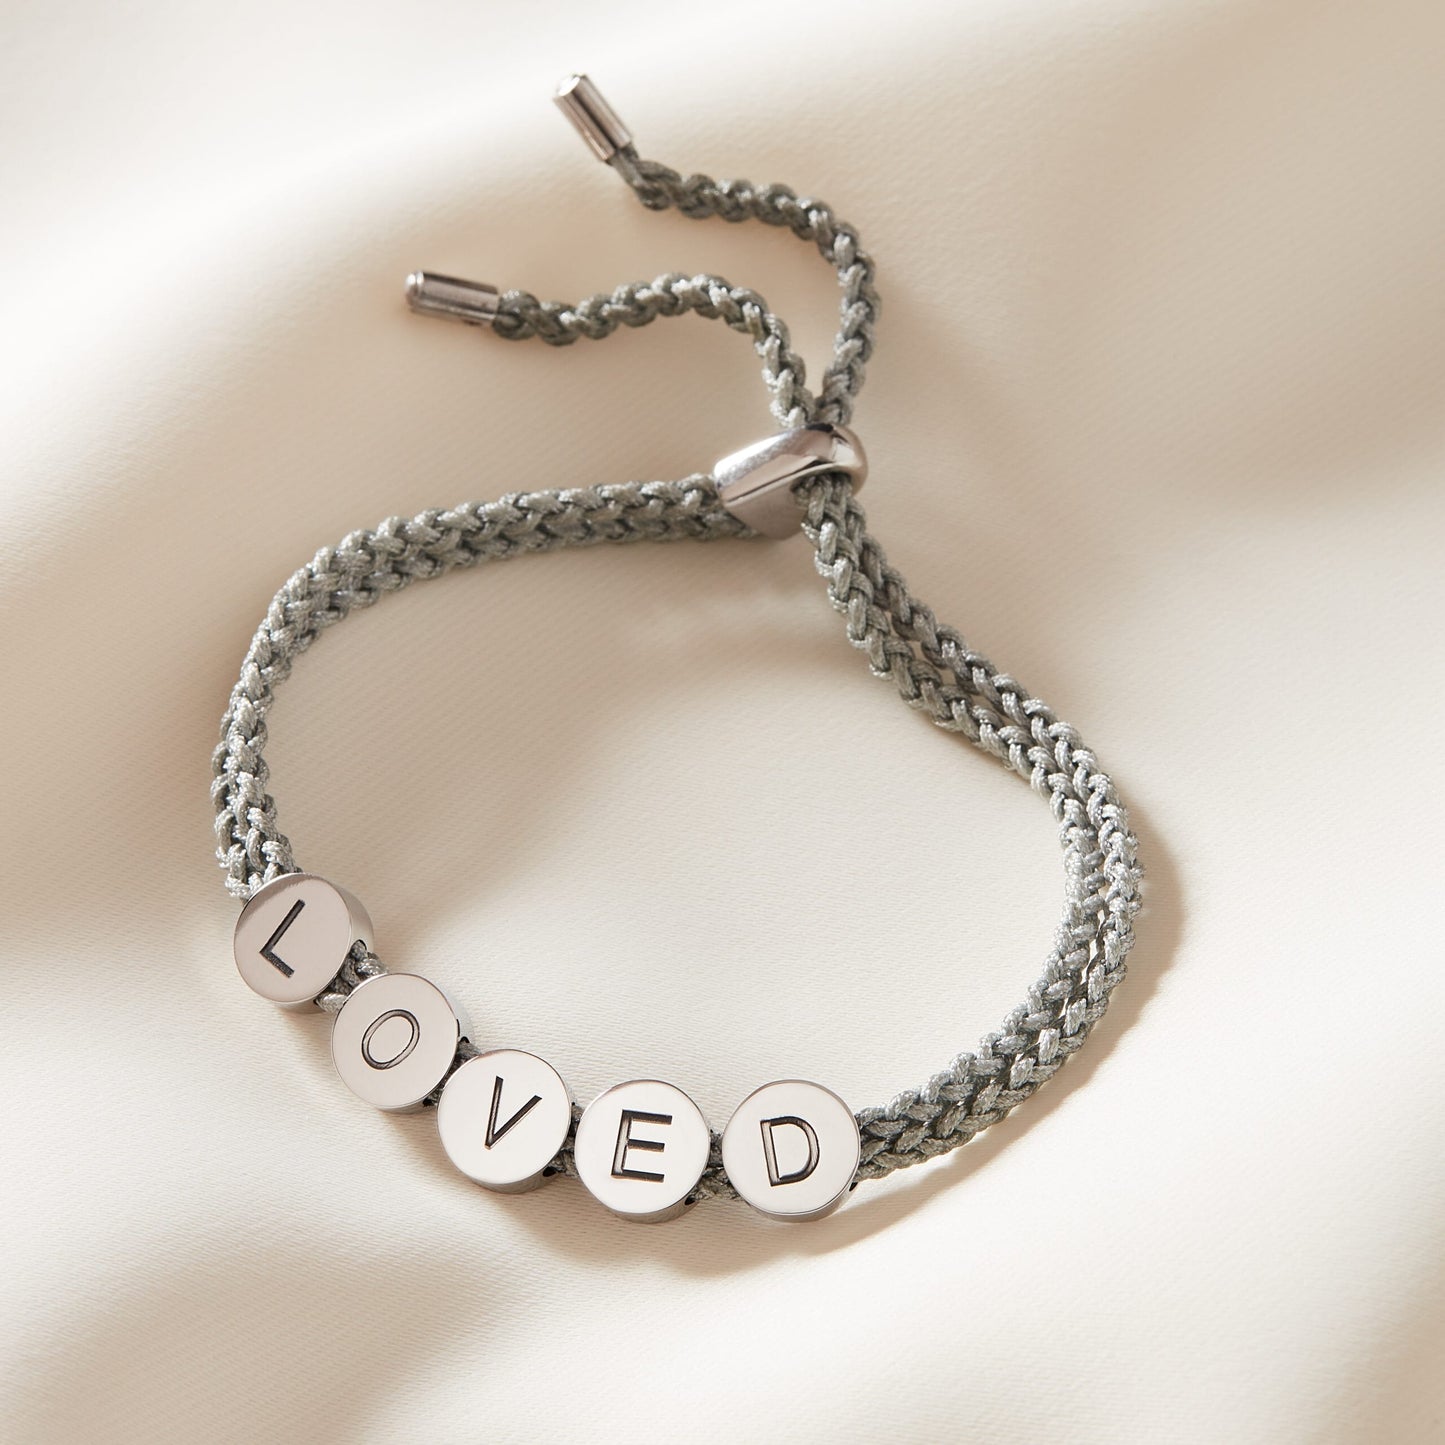 ‘Loved’ Bead Rope Bracelet